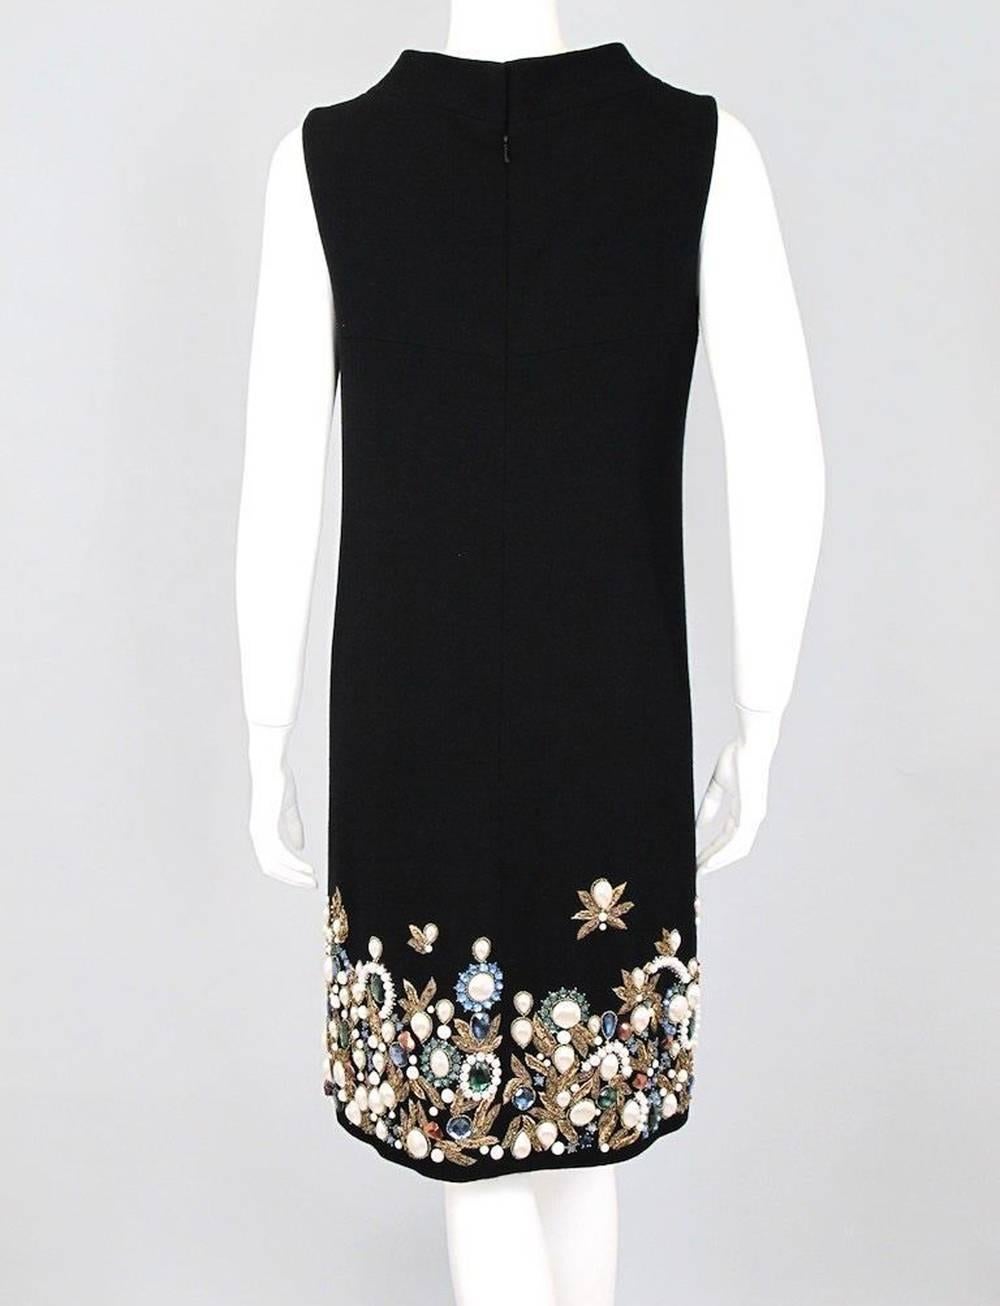 Women's Oscar De La Renta Black Wool Cocktail Dress with Gem Embroidery US 6 For Sale